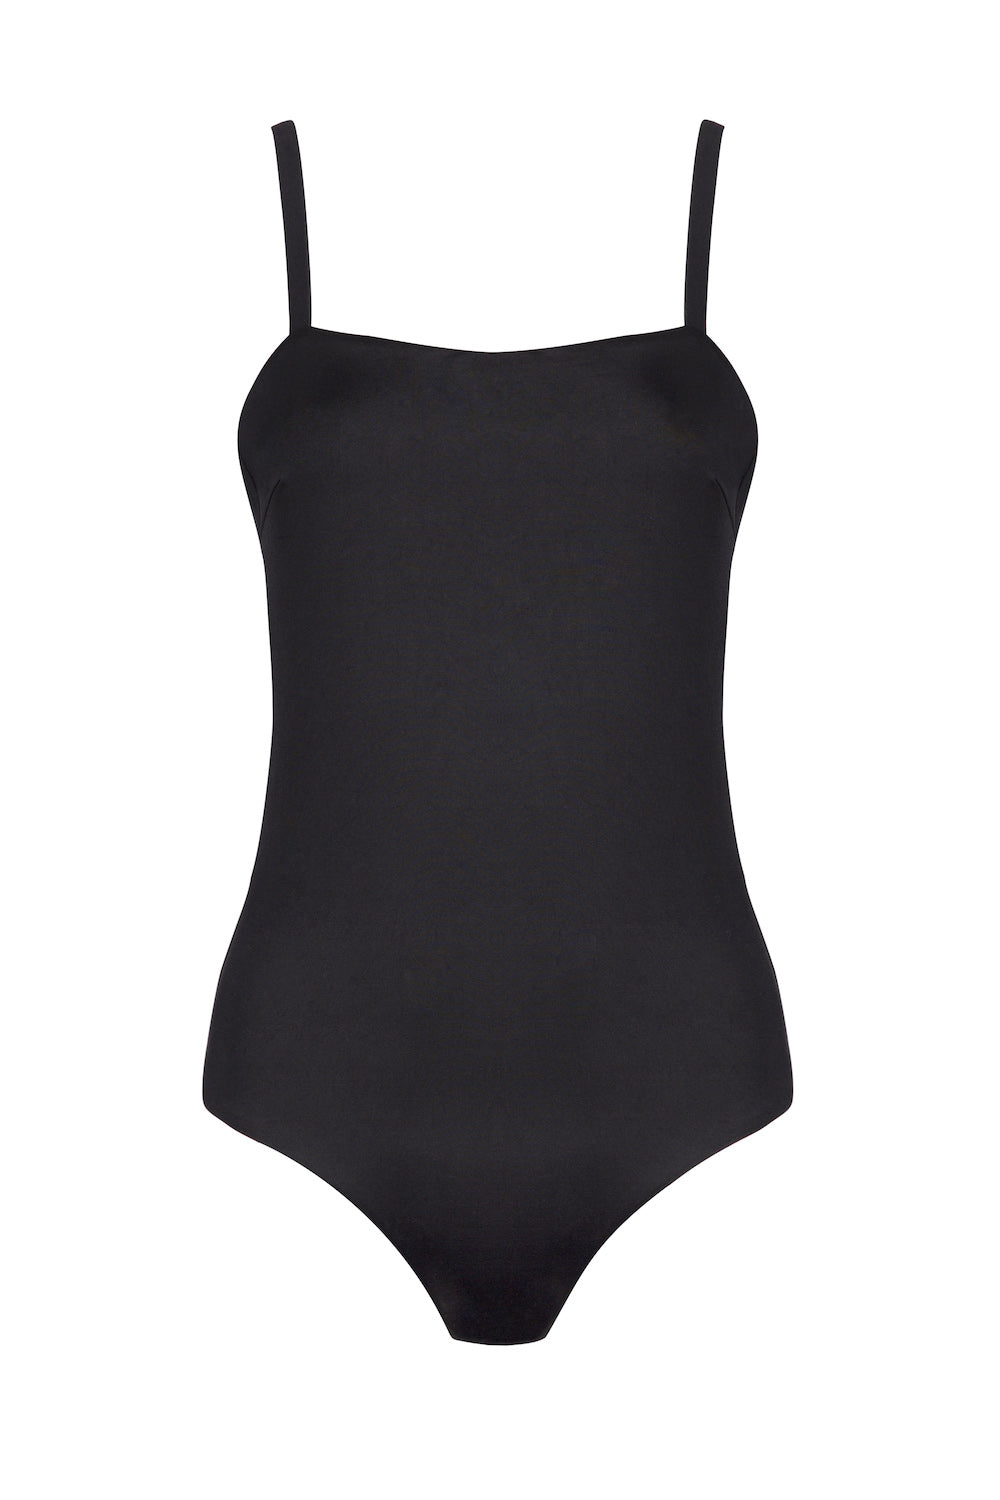 Palma Black Square Neck Swimsuit | Black Swimsuit